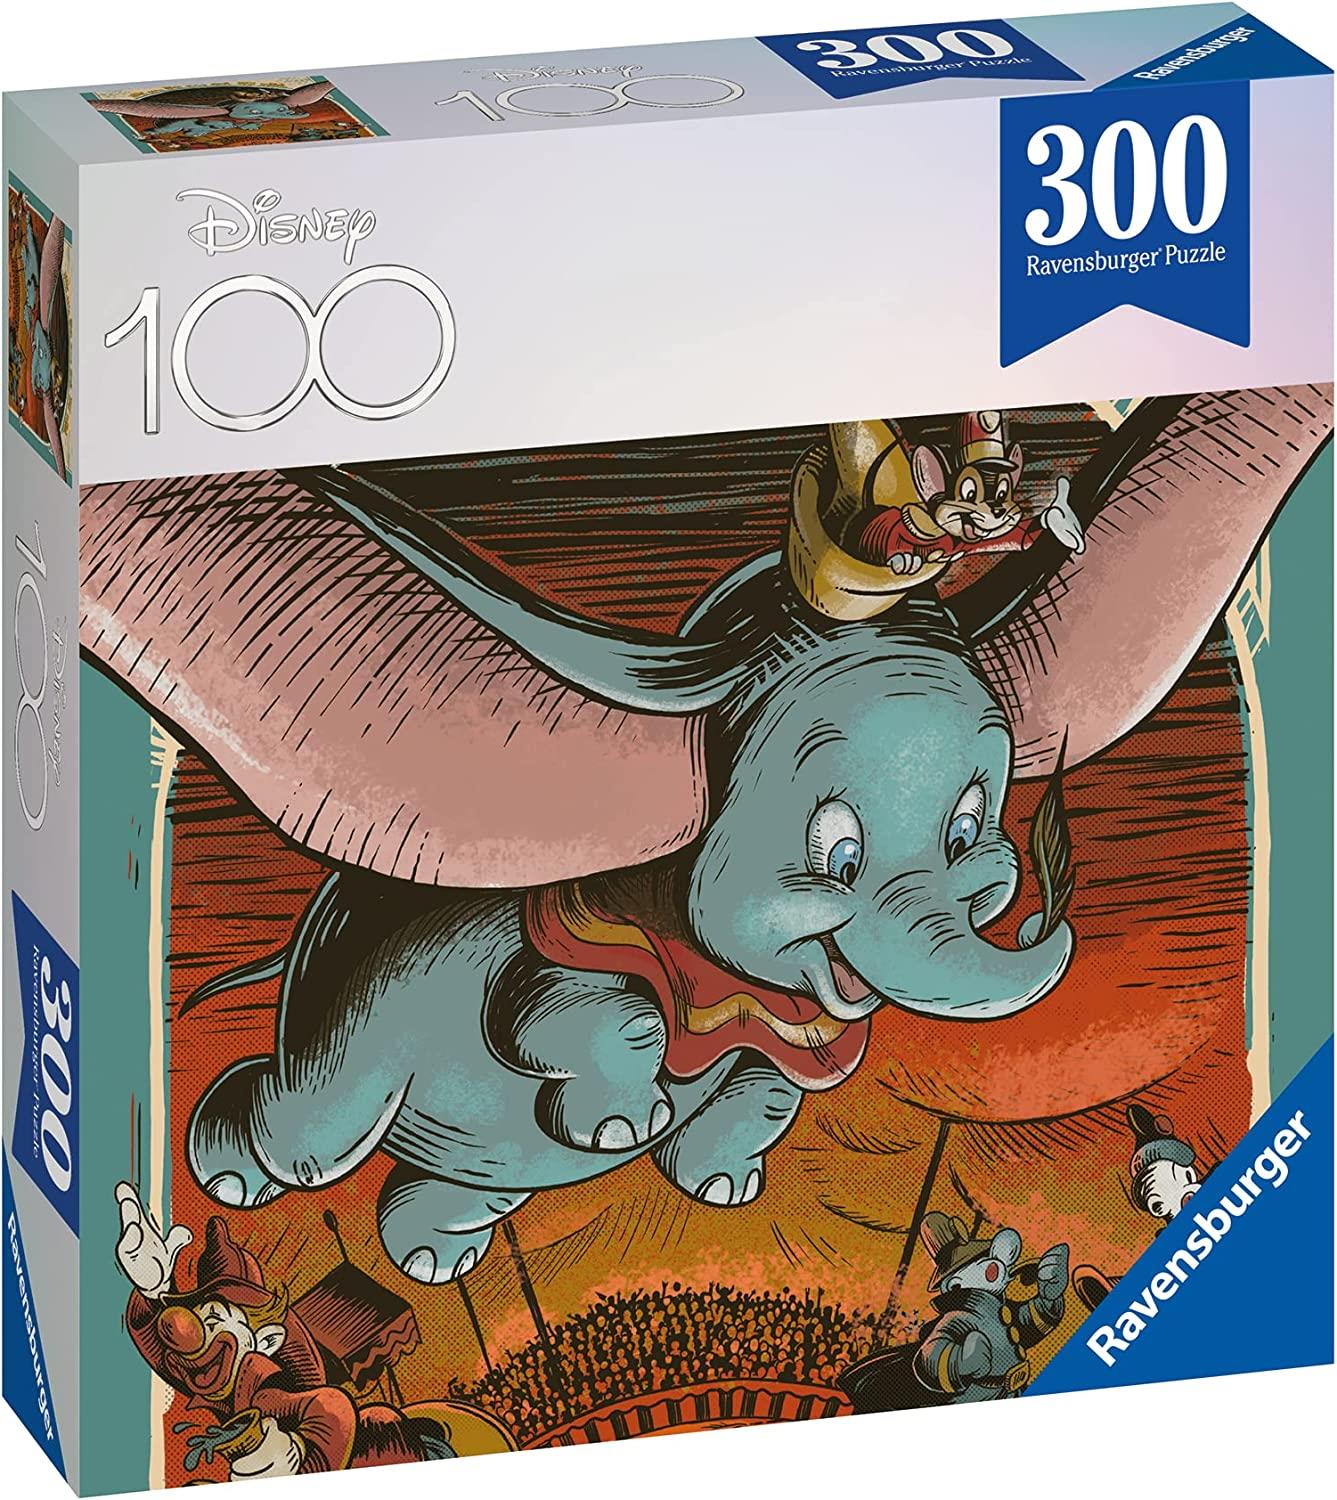 Ravensburger Disney 100th Anniversary Dumbo Jigsaw Puzzle (300 Pieces)